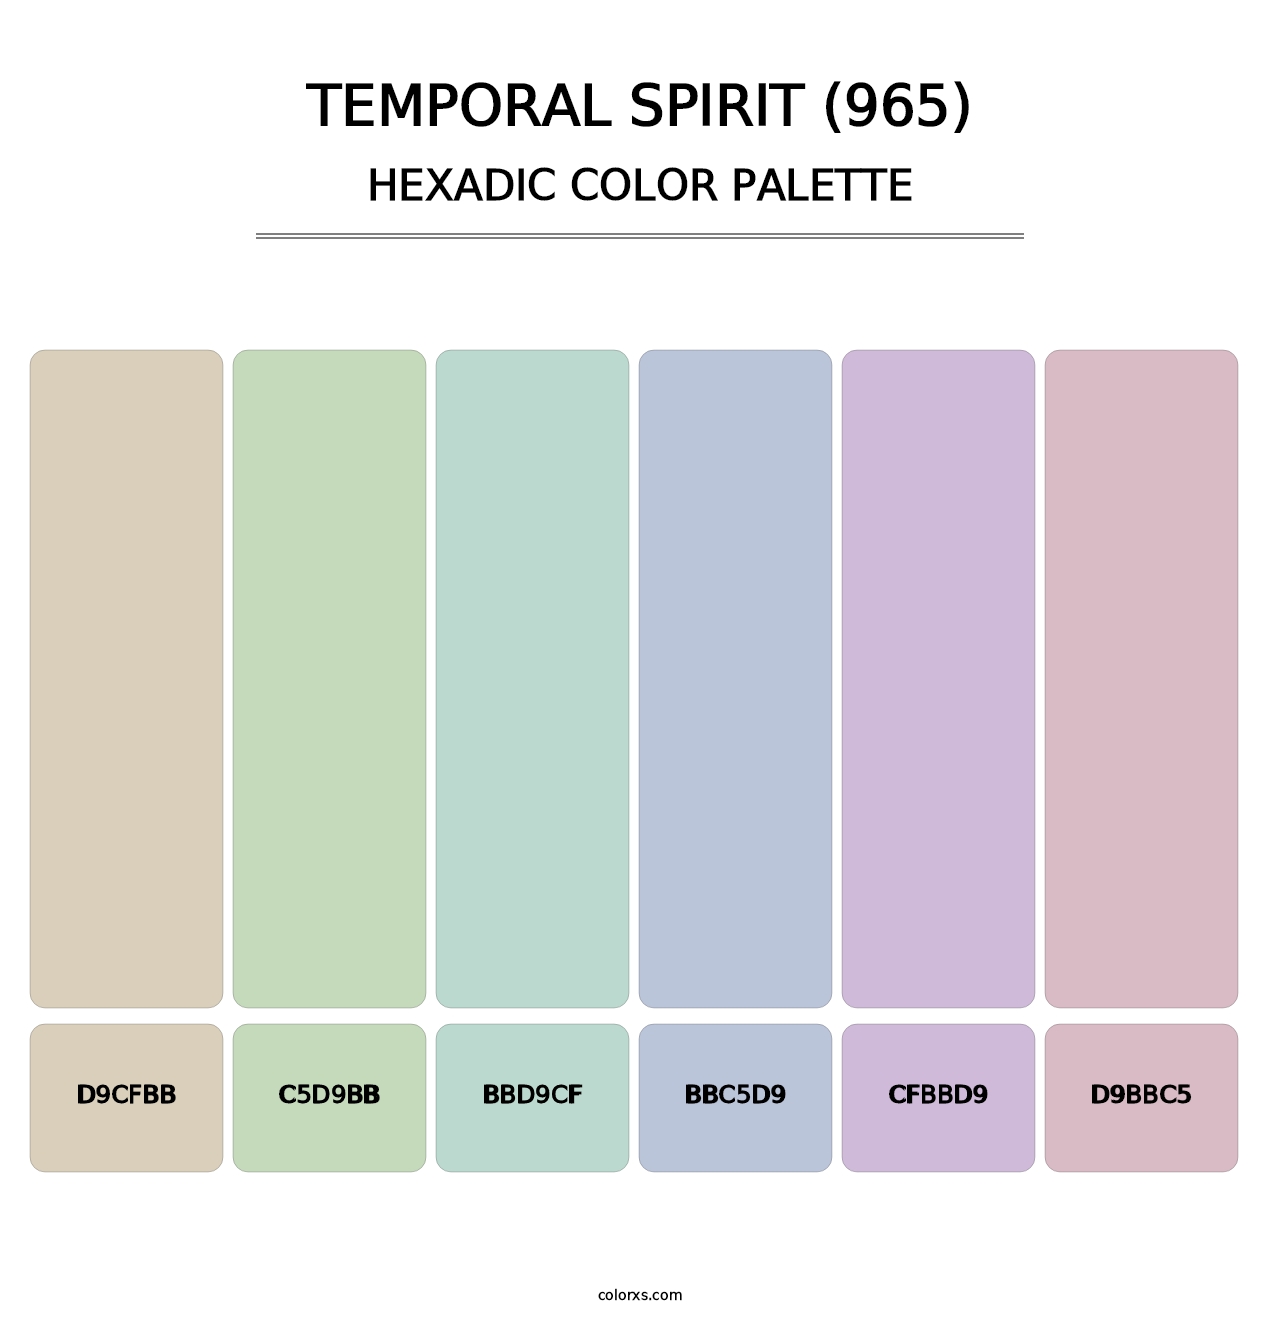 Temporal Spirit (965) - Hexadic Color Palette